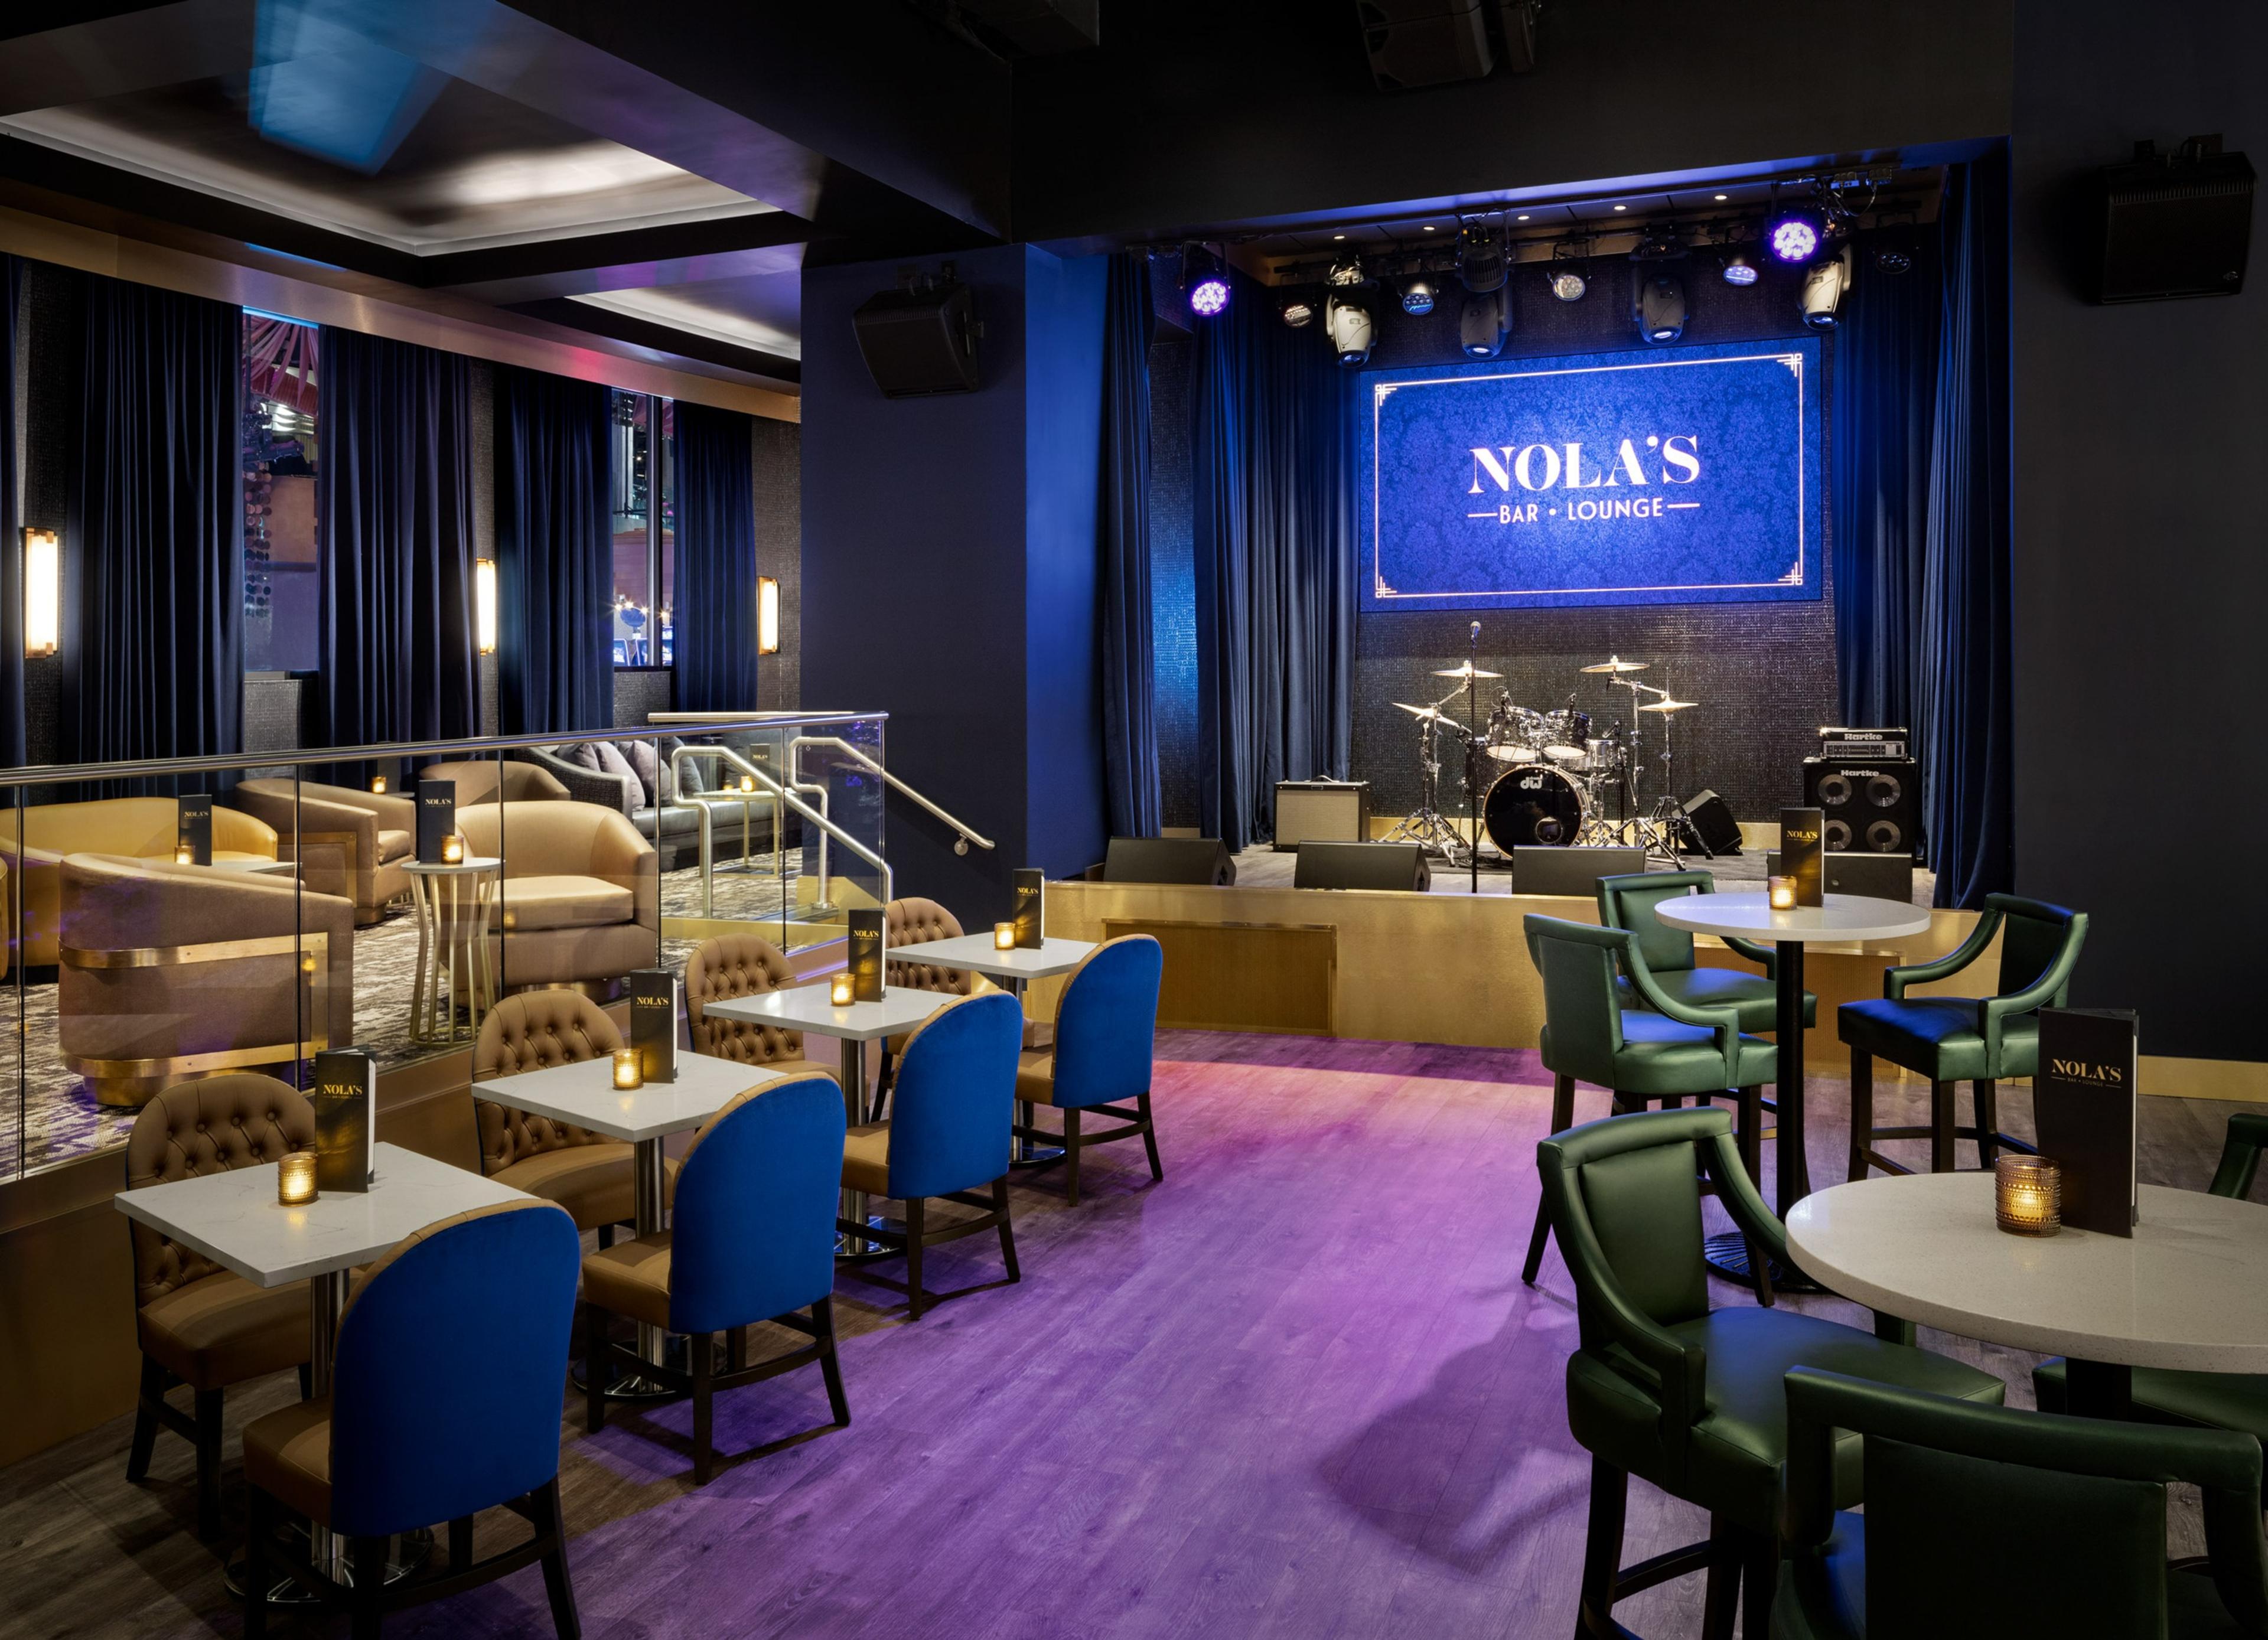 Nola's Bar & Lounge